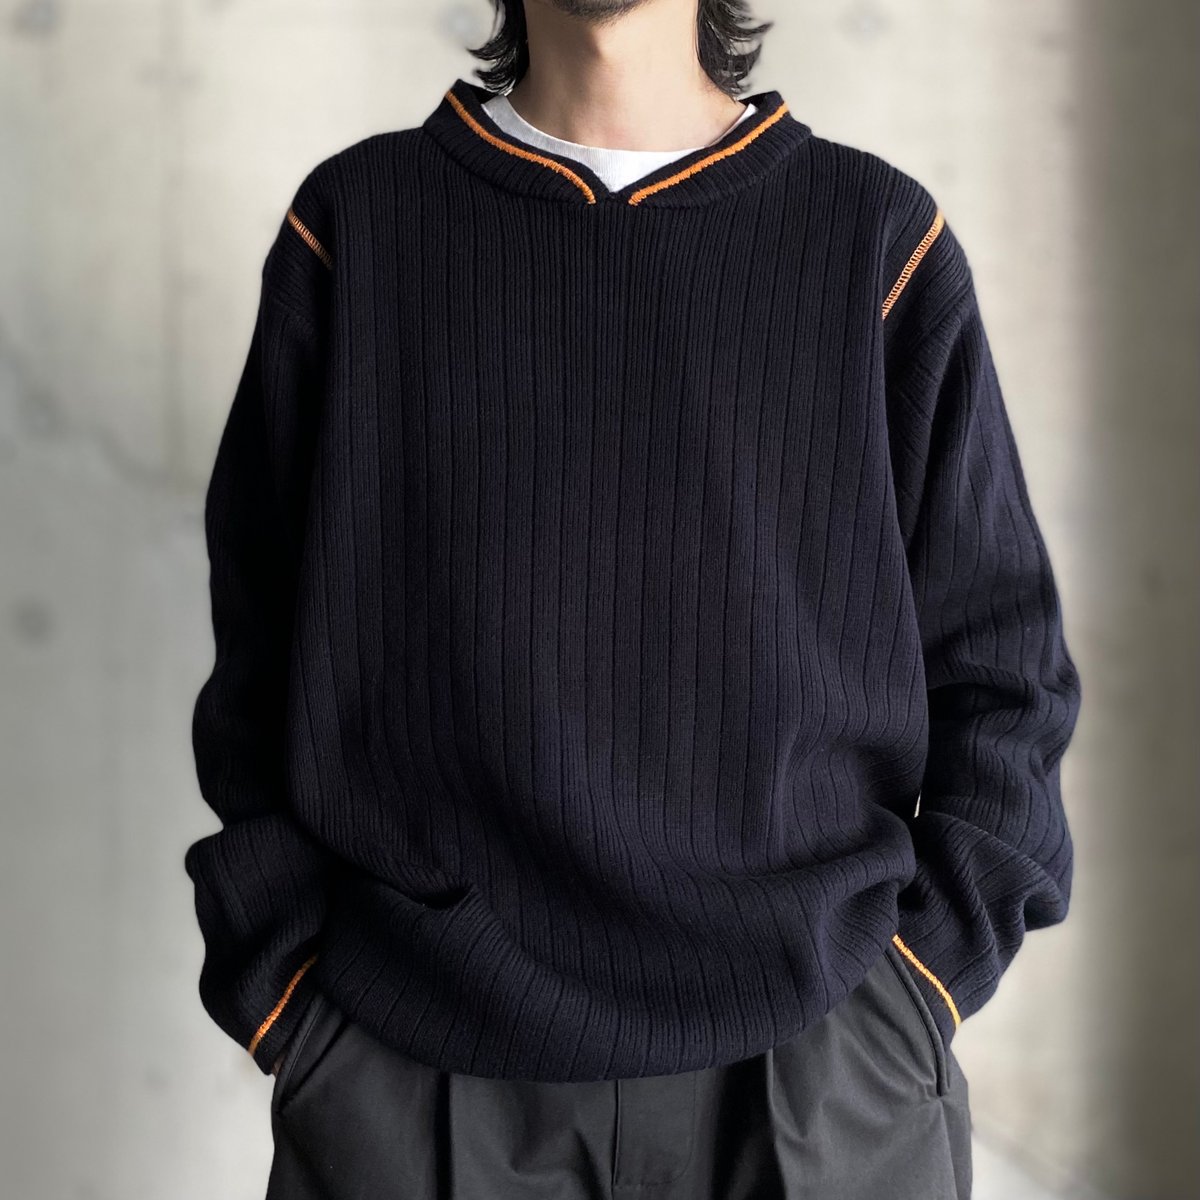 2000's Orange line design v-necked knit sweater...